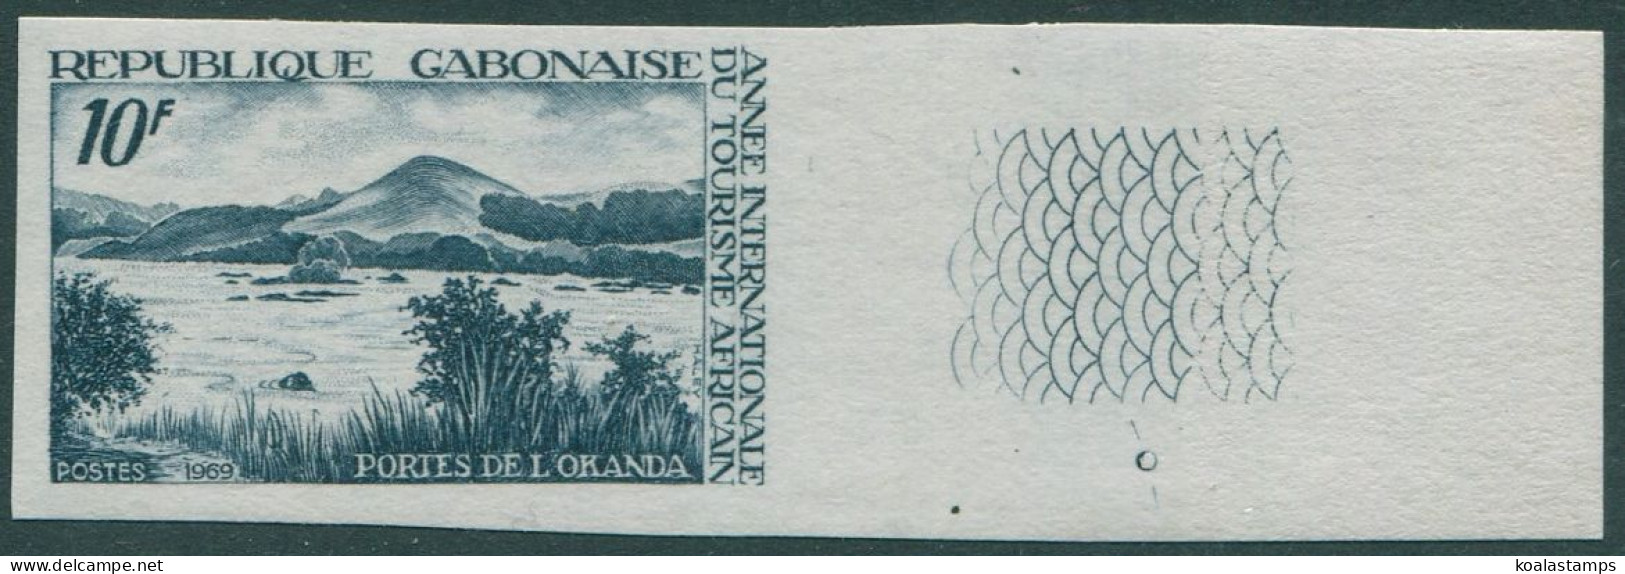 Gabon 1969 SG347 10f Portes De L'Akonda Imperf MNH - Gabon